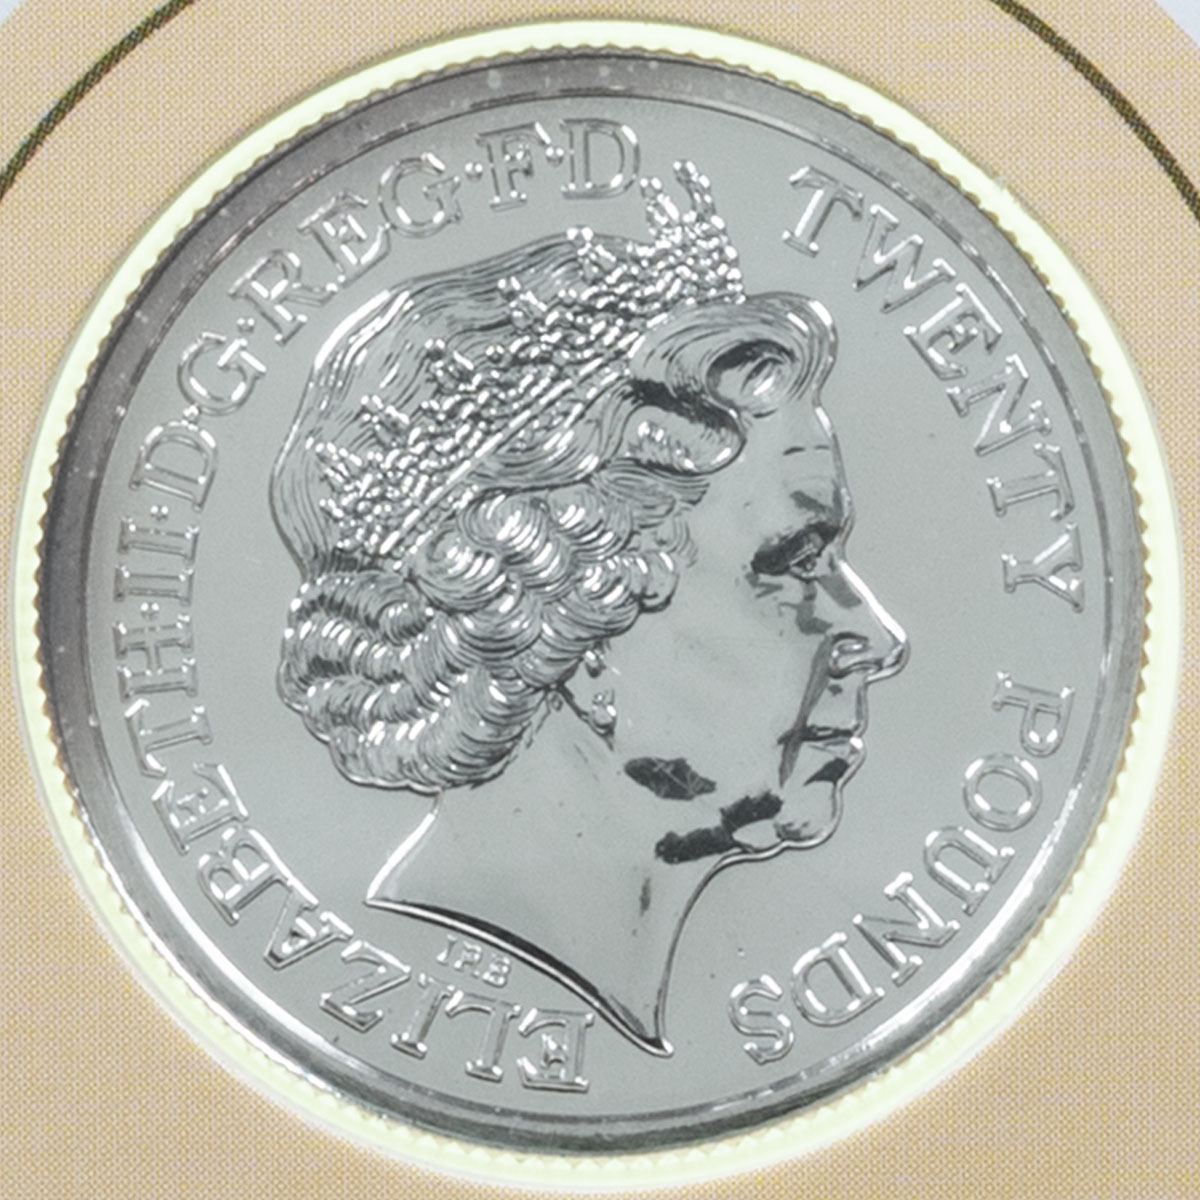 UK1420FW 2014 First World War Outbreak Twenty Pound Silver Brilliant Uncirculated Coin In Folder Obverse